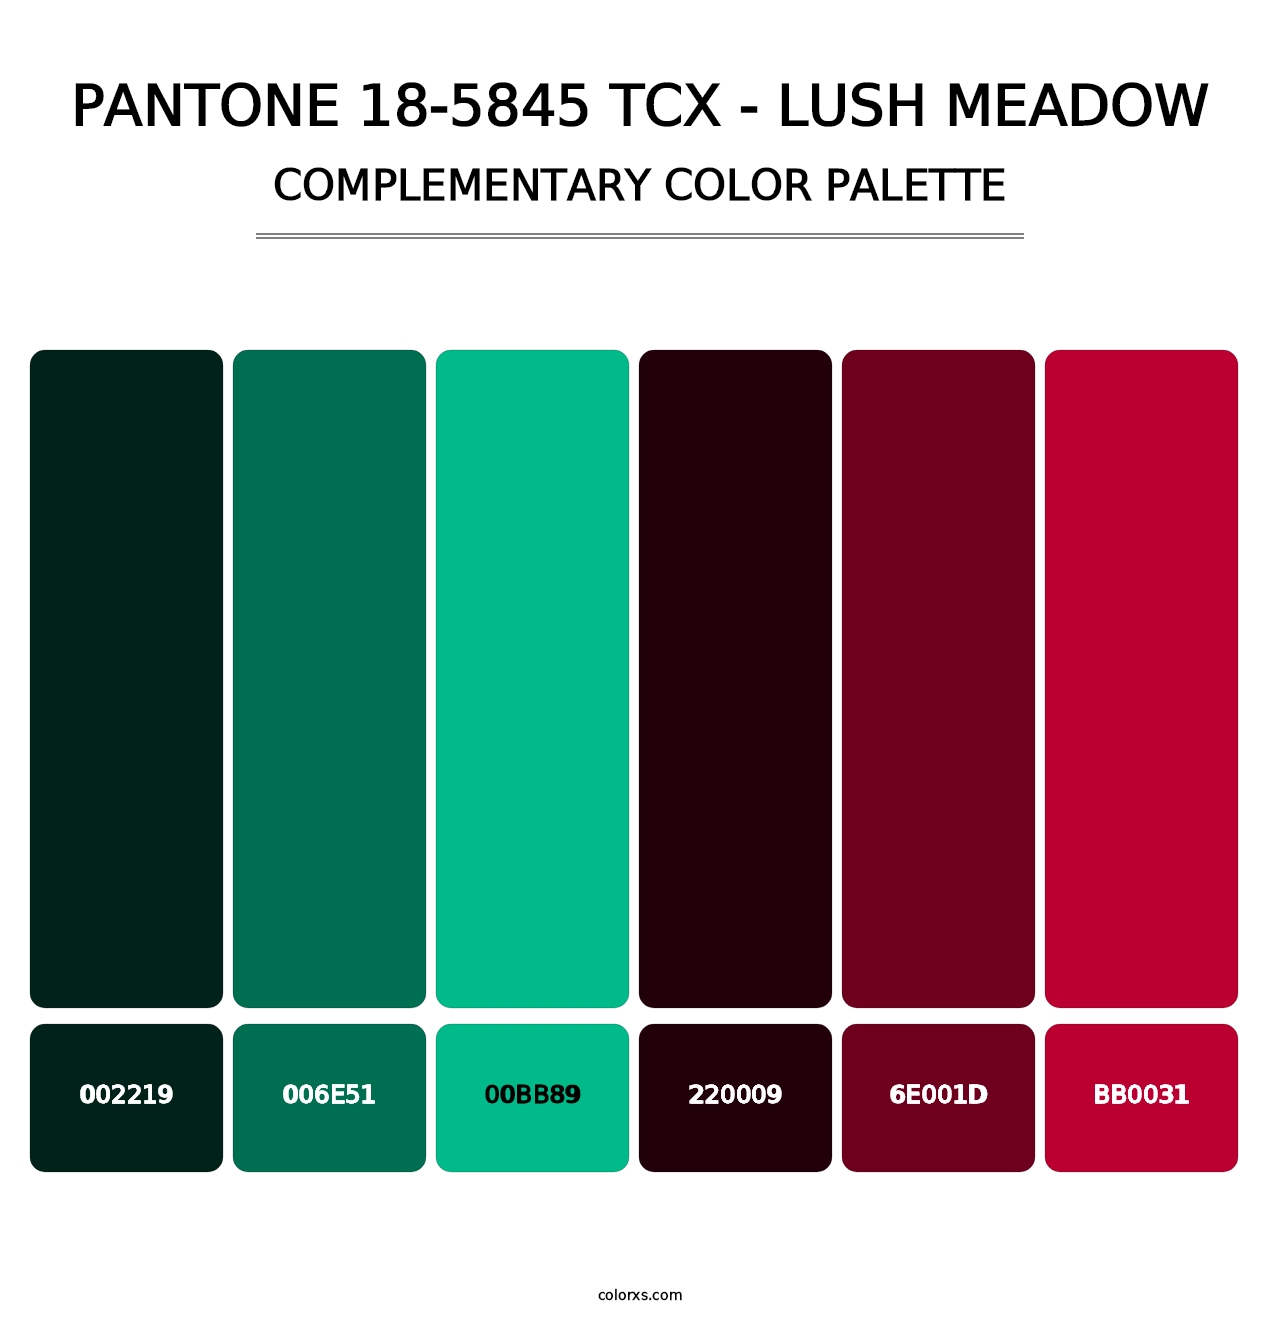 PANTONE 18-5845 TCX - Lush Meadow - Complementary Color Palette